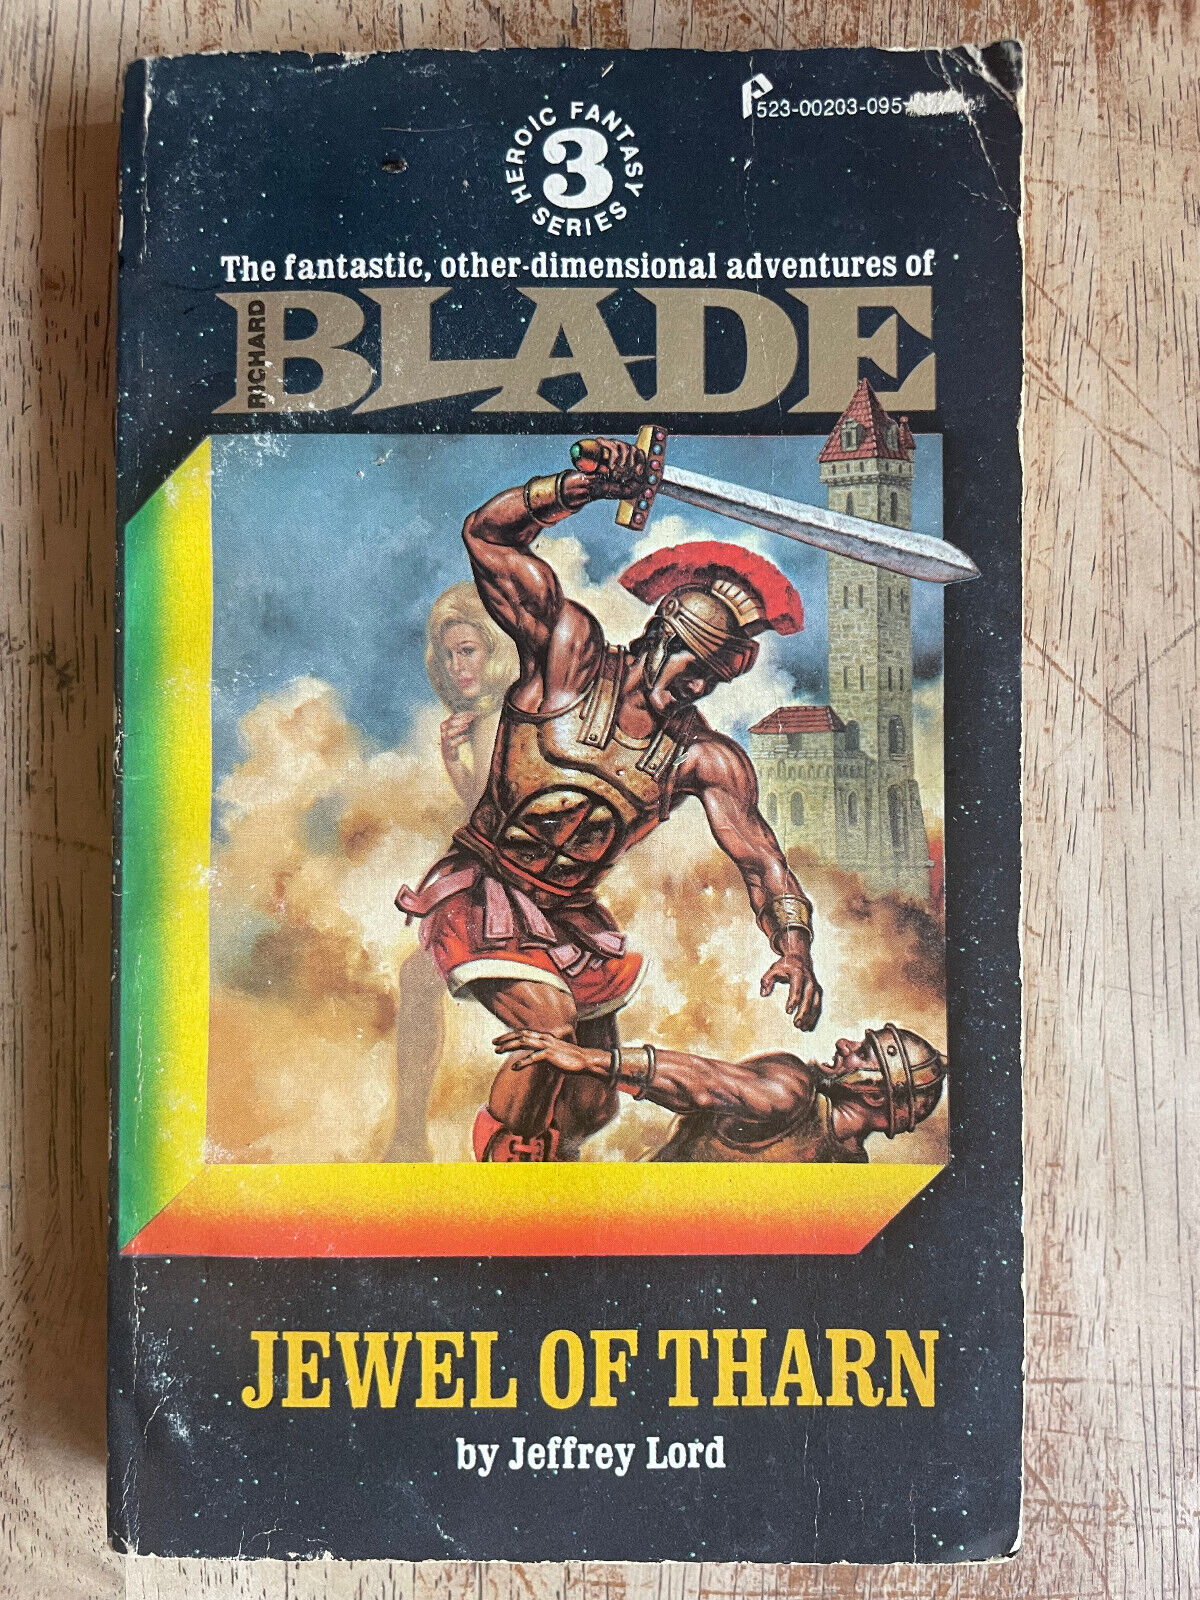 RICHARD BLADE #3 Jewel Of Tharn 1973 Jeffrey Lord Lyle Kenyon Engel